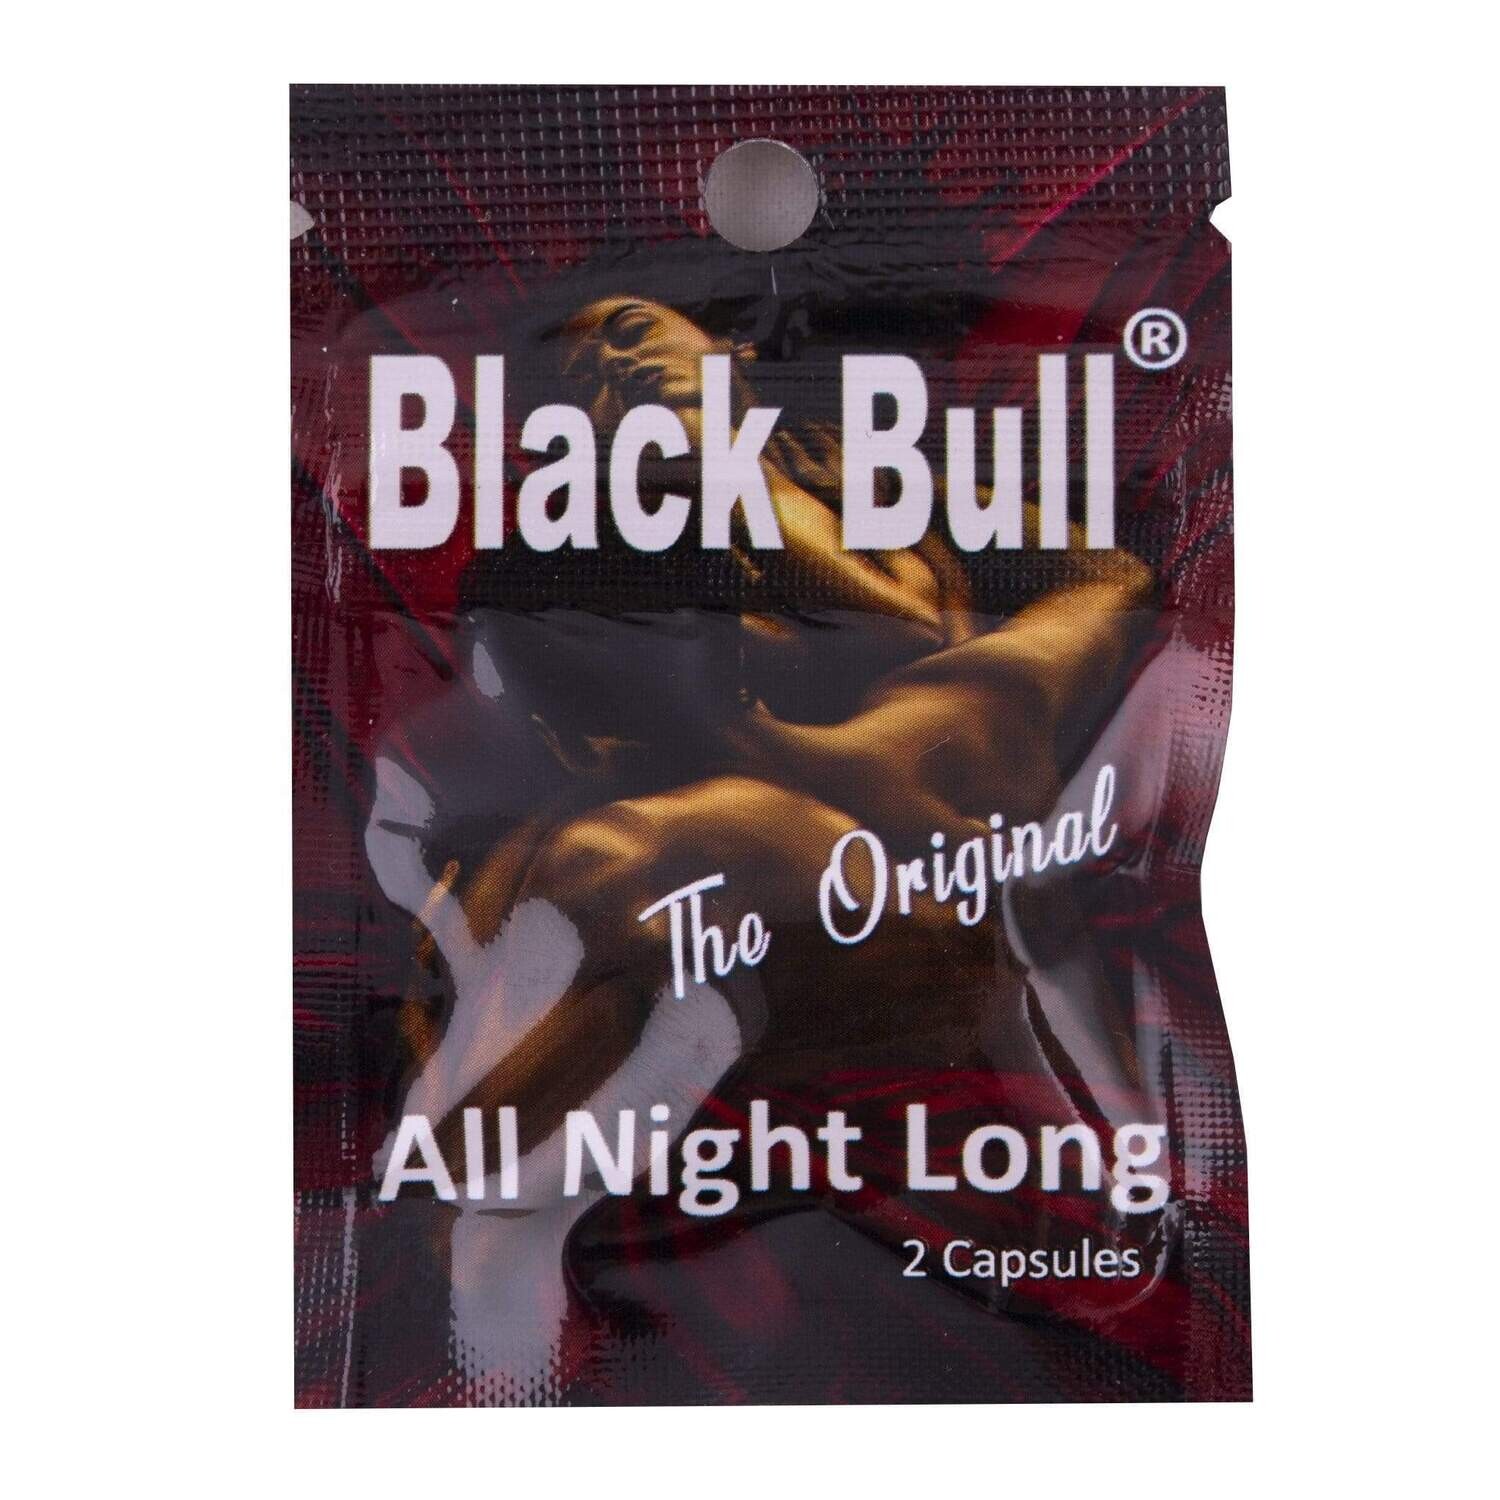 Black Bull The Original 2 Capsules